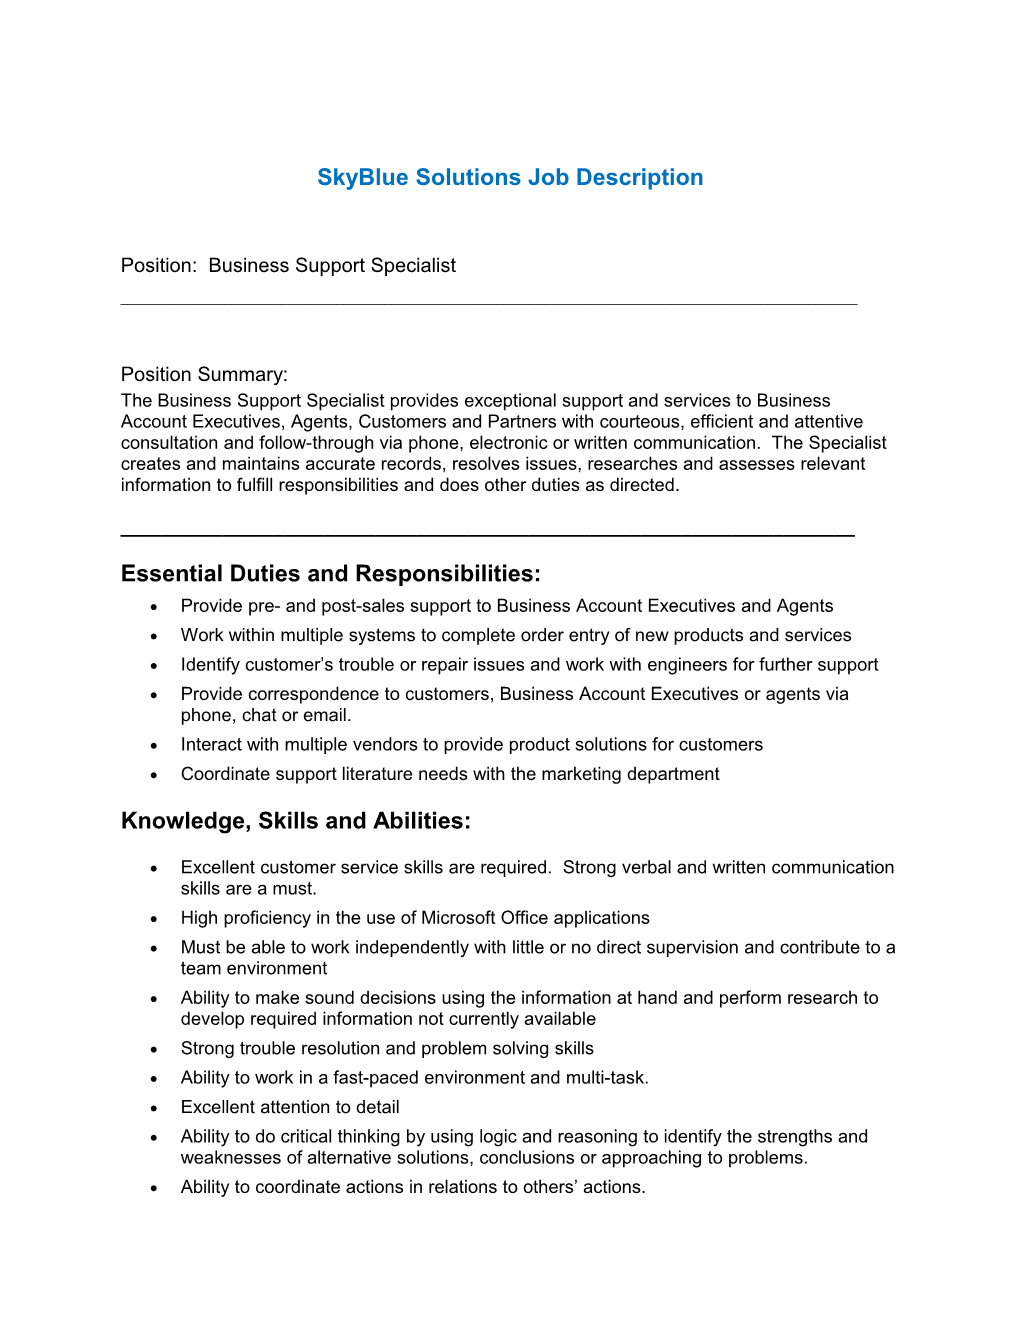 Skyblue Solutions Job Description